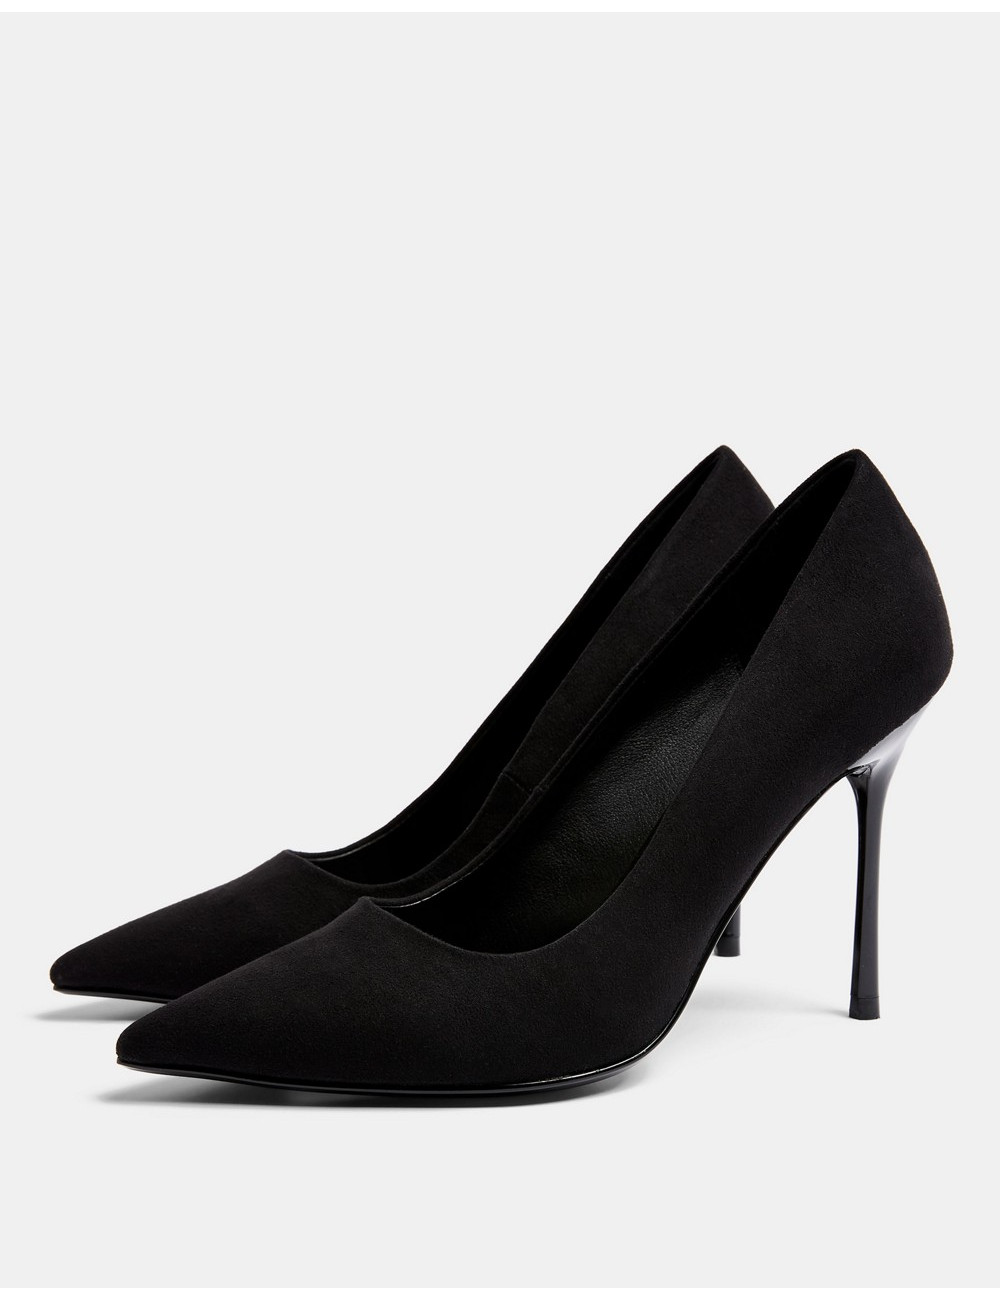 Topshop court shoe in black